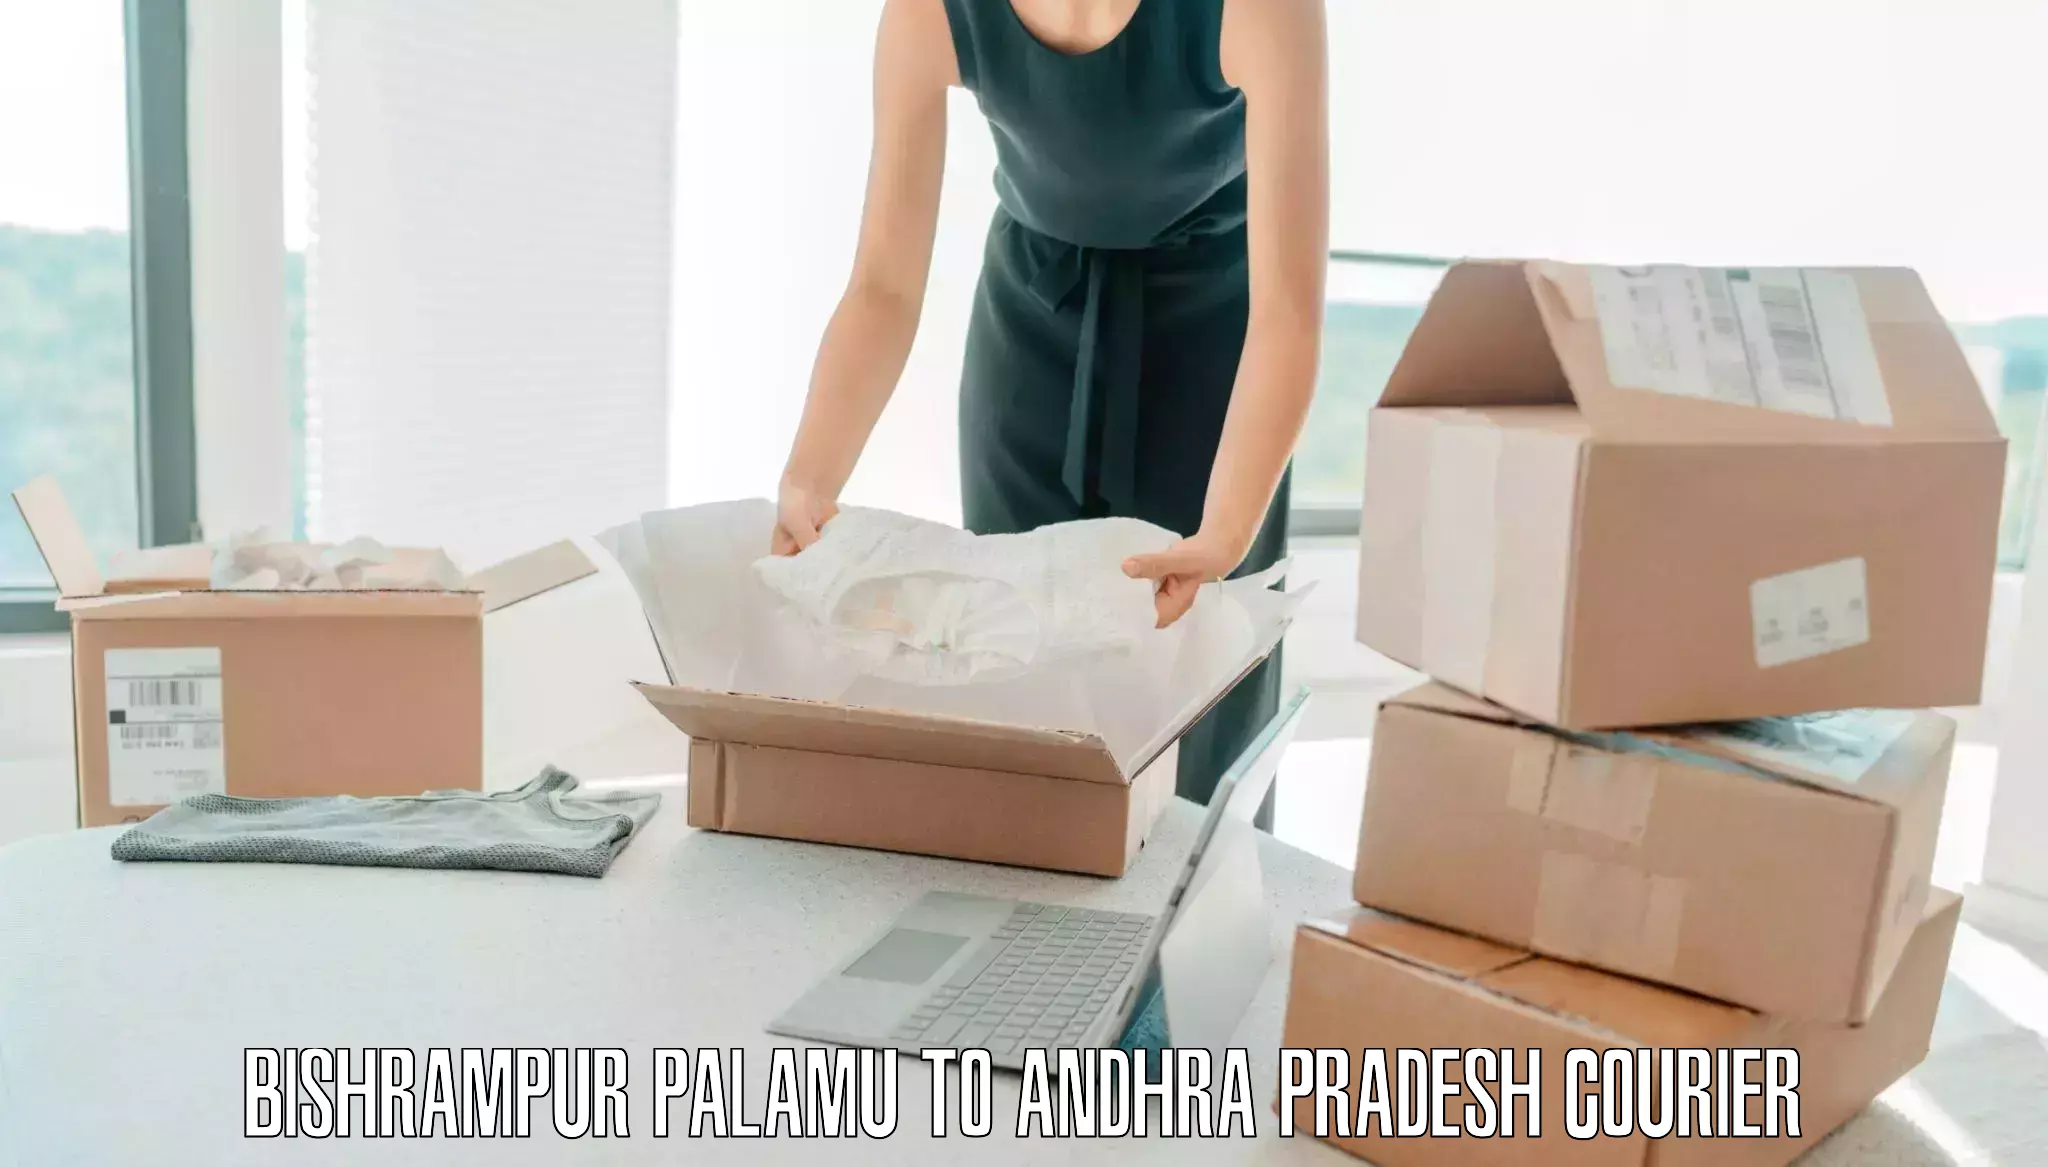 Luggage delivery app Bishrampur Palamu to Cuddapah